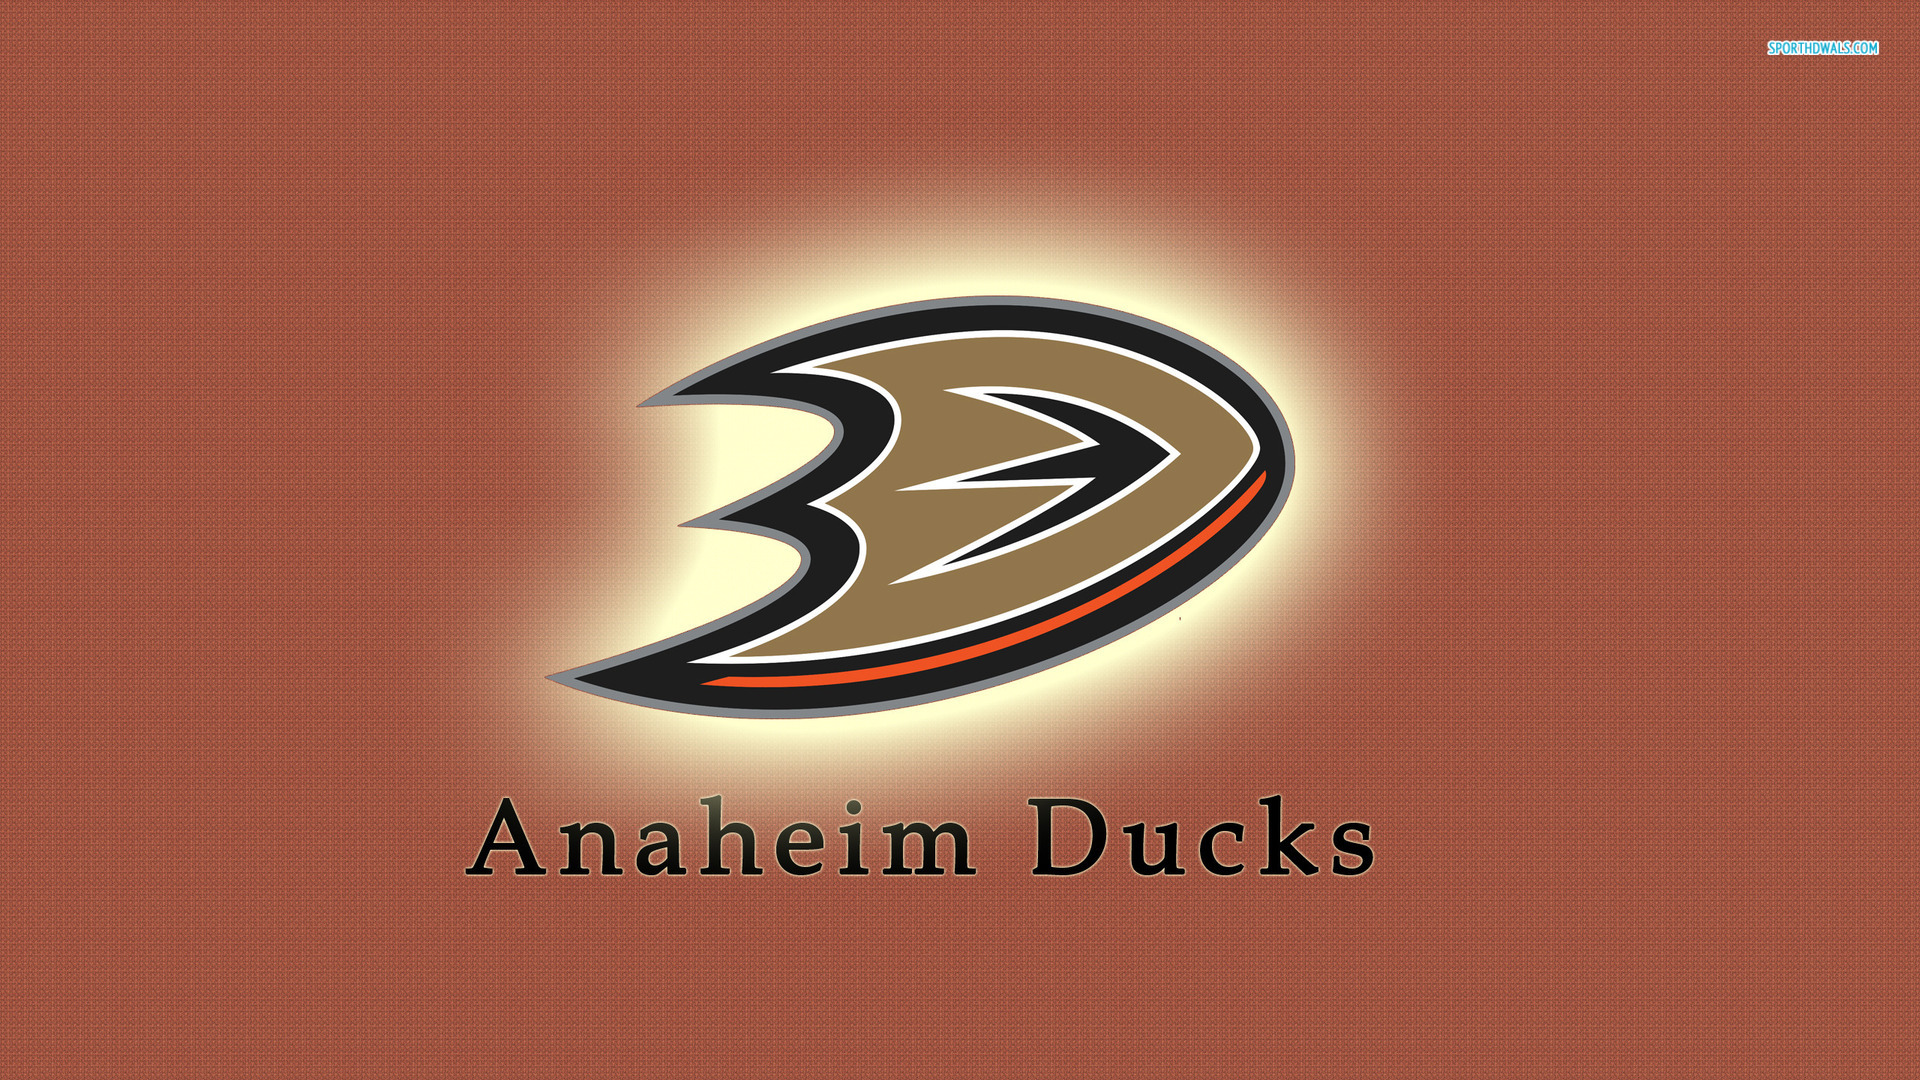 Anaheim Ducks desktop wallpapers Anaheim Ducks wallpapers